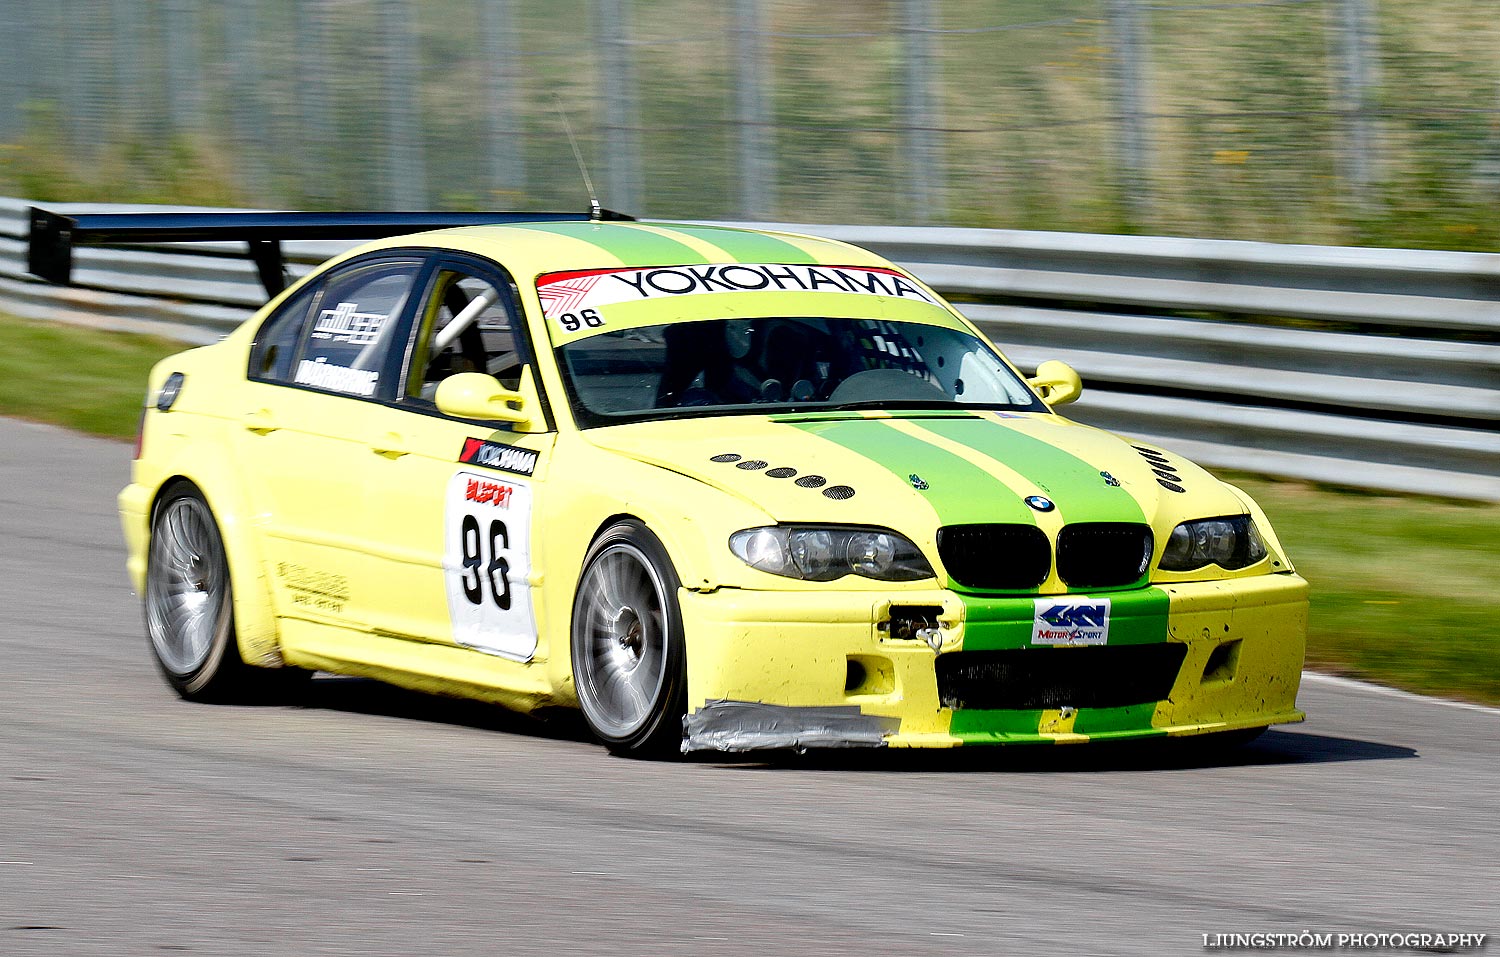 SSK Raceweek,mix,Kinnekulle Ring,Götene,Sverige,Motorsport,,2011,44458